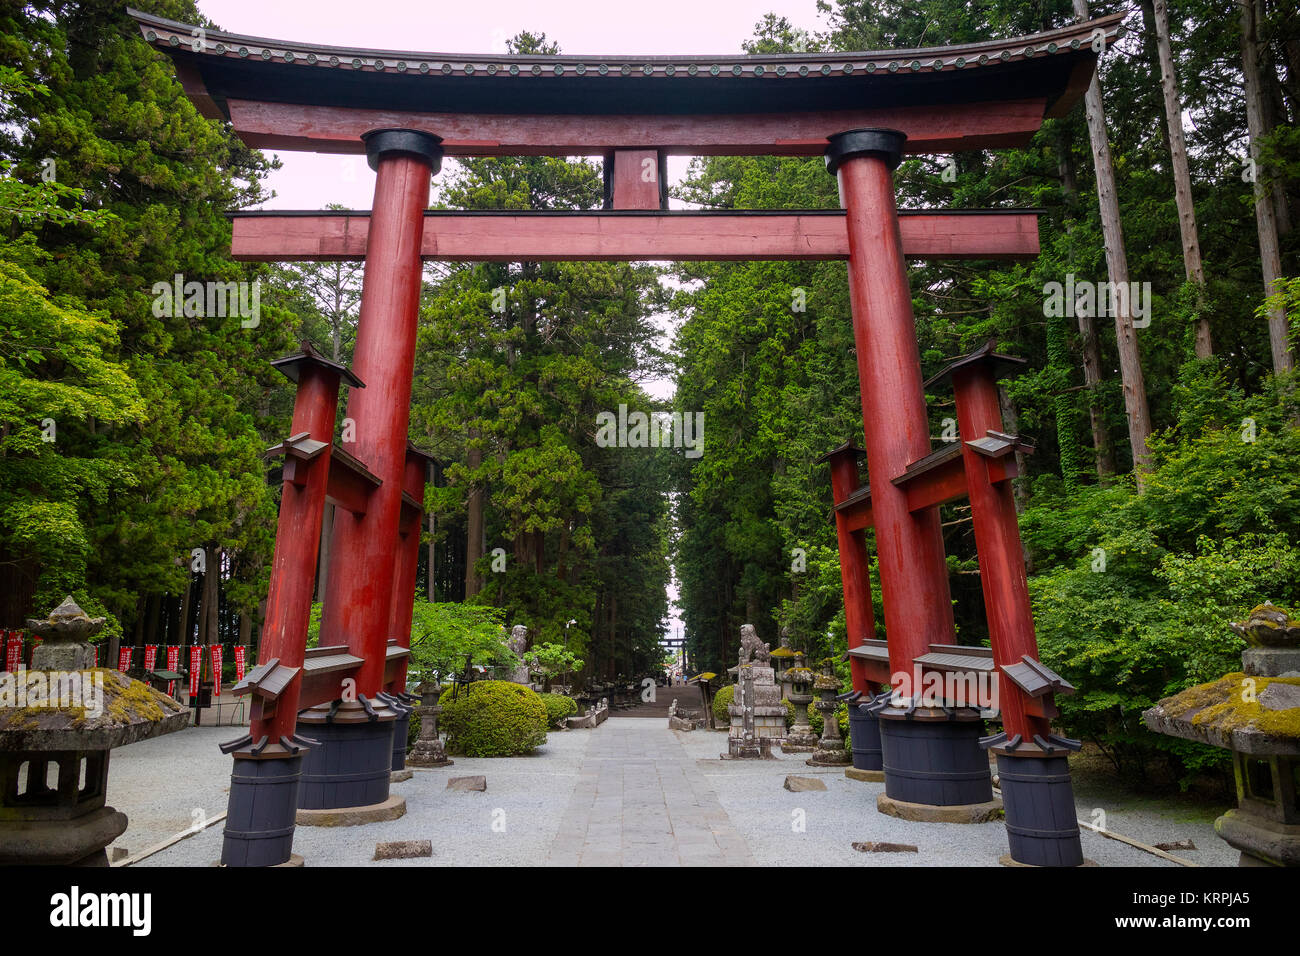 Fujiyoshida city, Giappone - Giugno 13, 2017; Rosso torii, Giapponese gate al Fujiyoshida Sengen Santuario Foto Stock